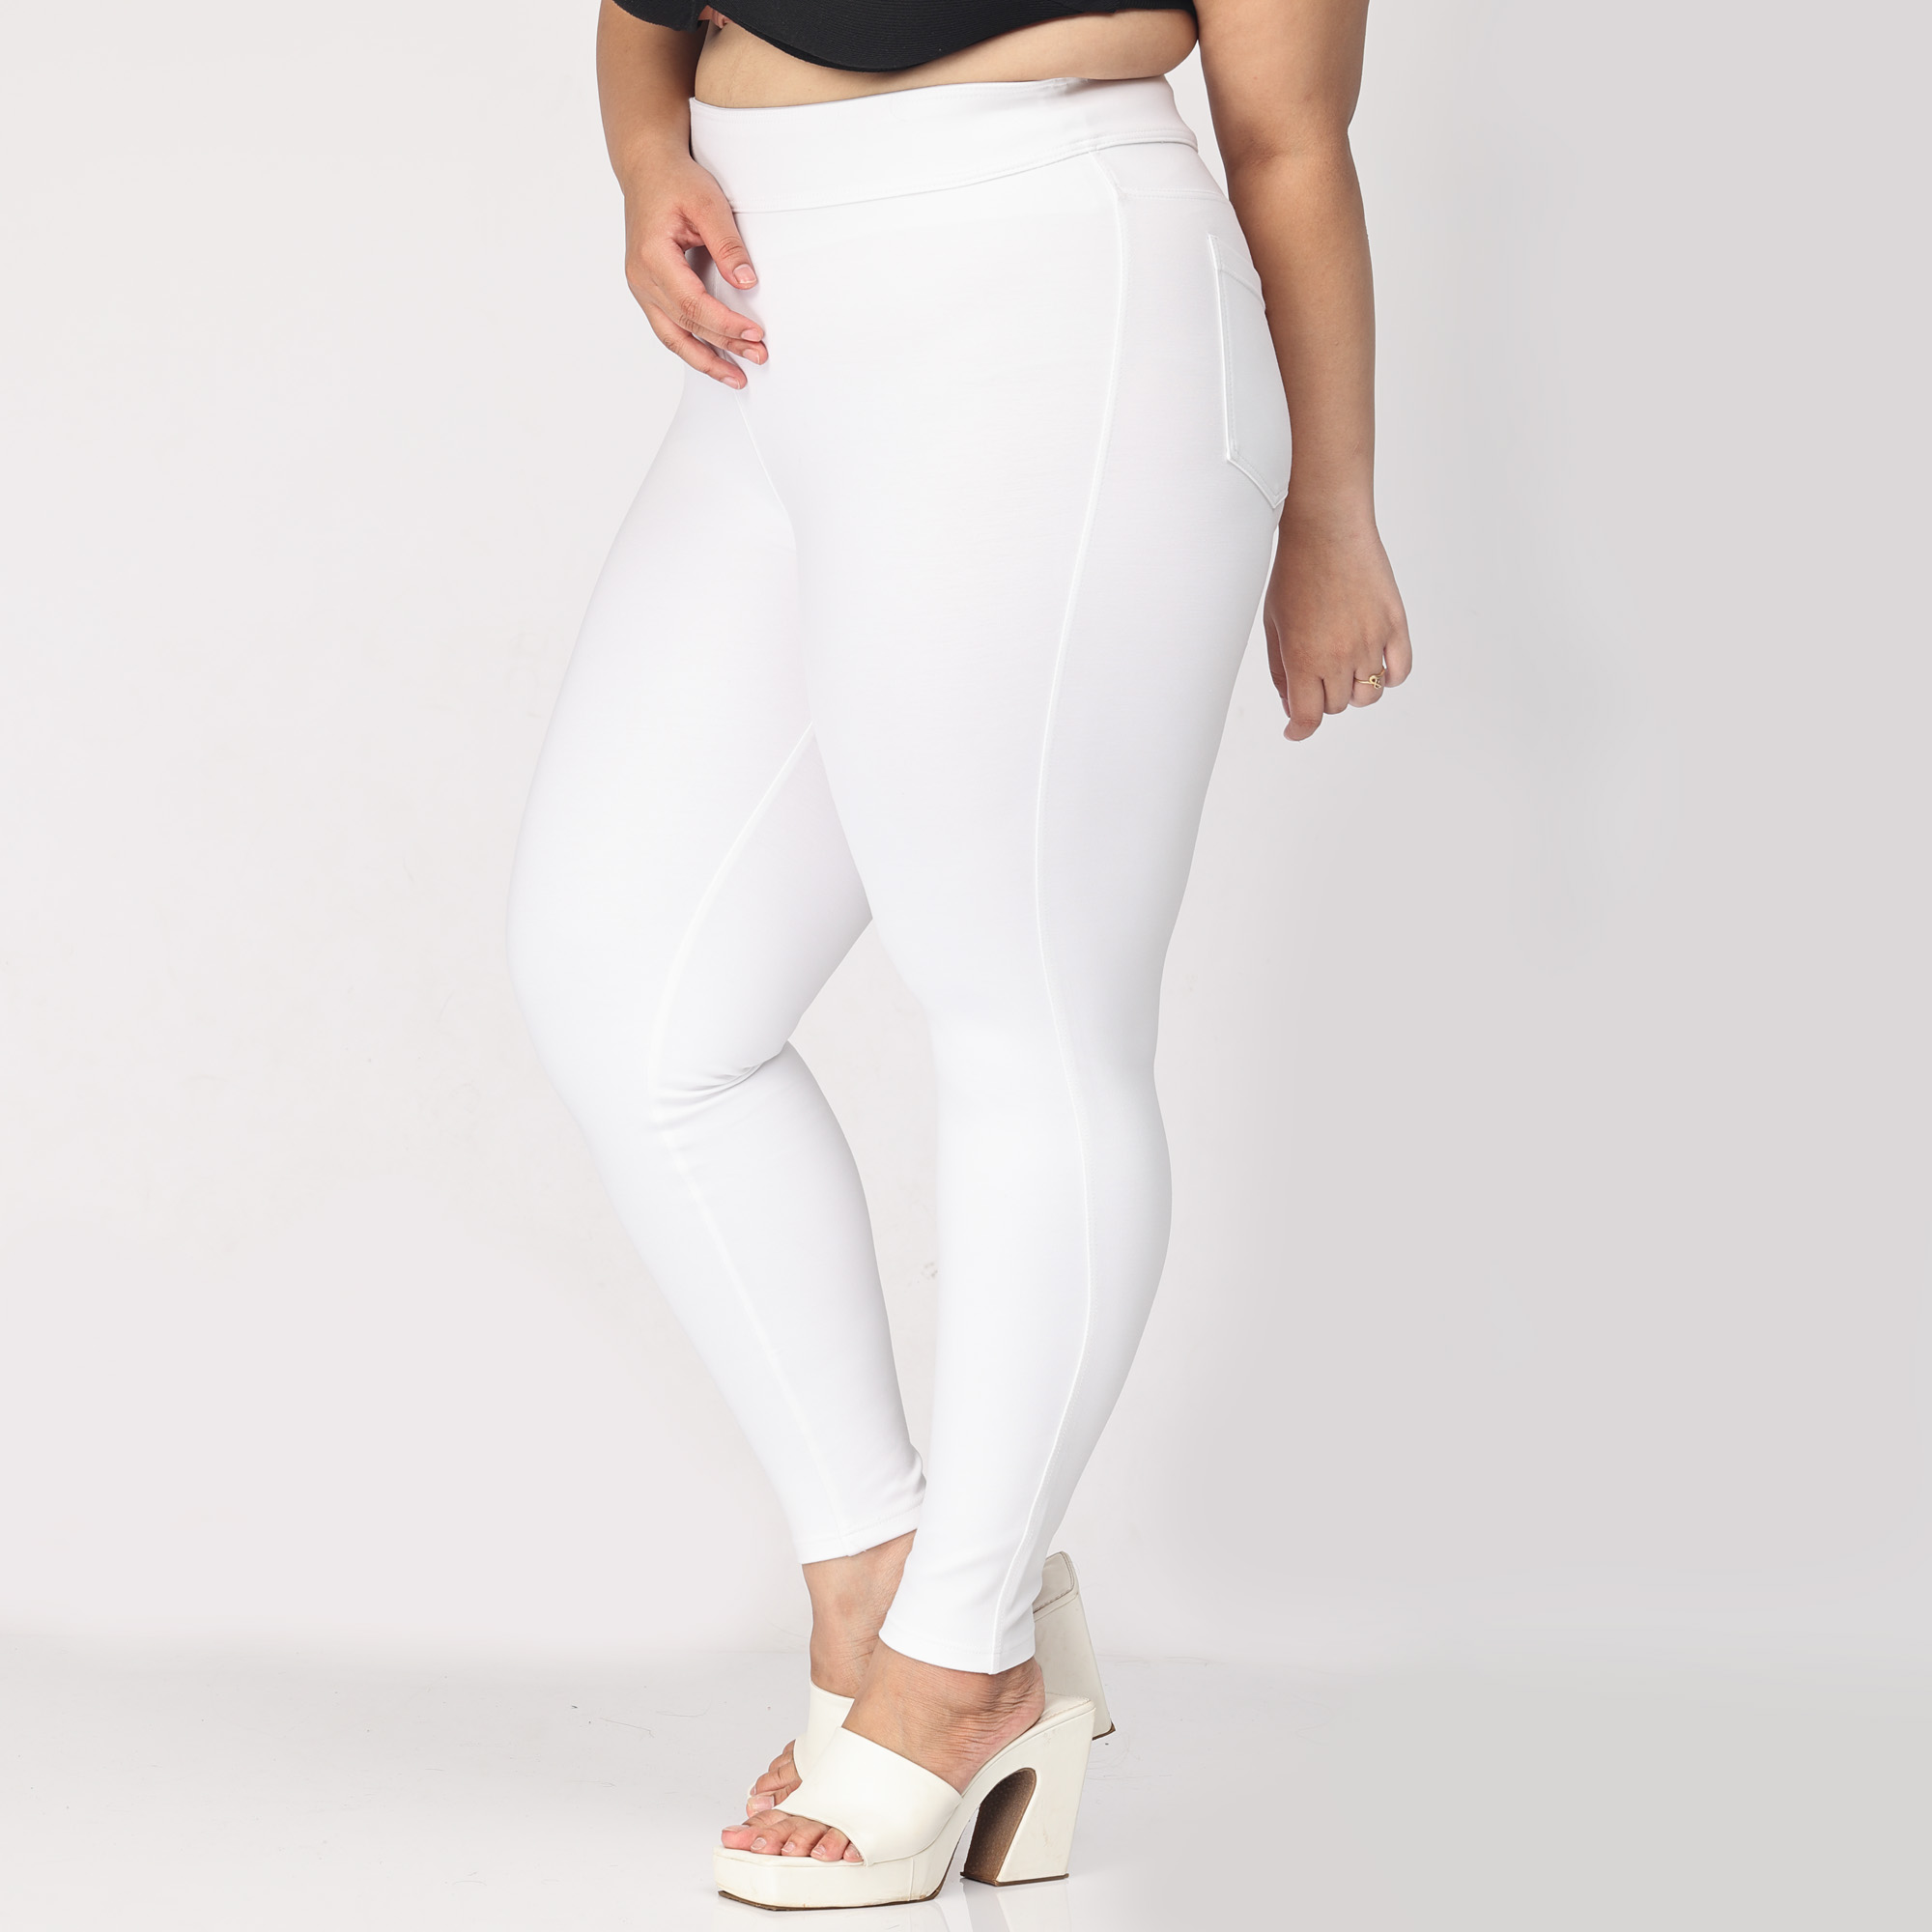 Women white jeggings Plus size compression pant 2 bk pockets - Belore Slims